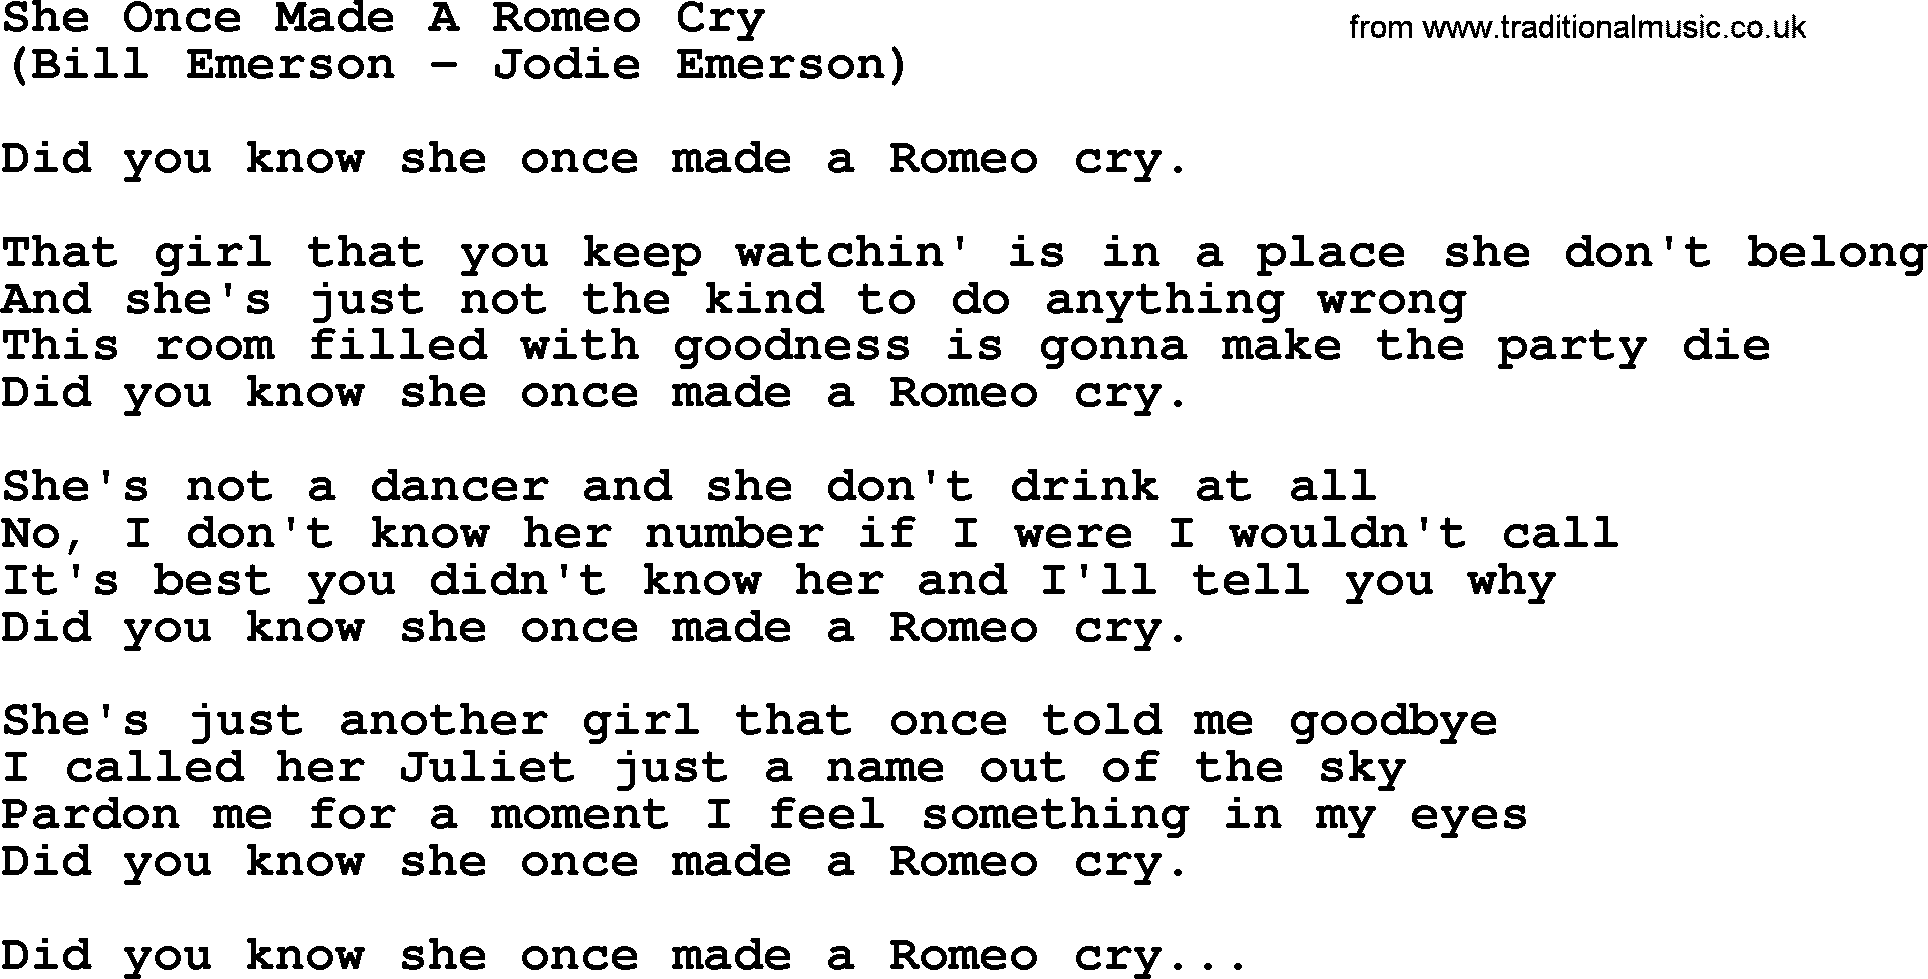 George Jones song: She Once Made A Romeo Cry, lyrics